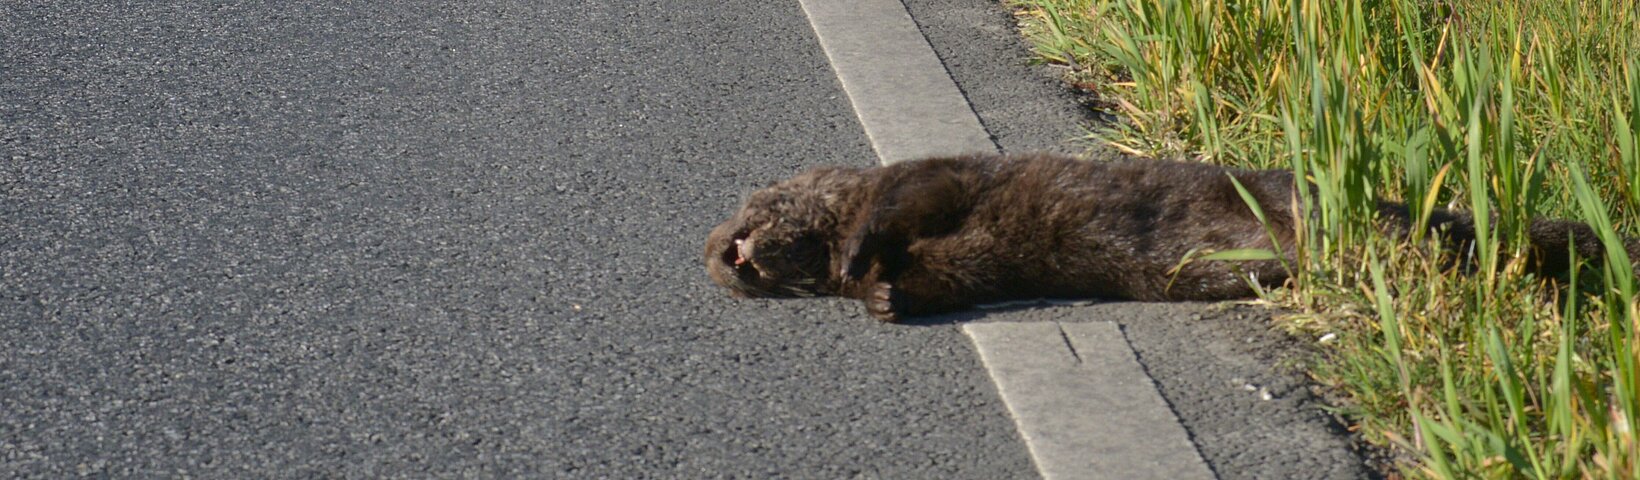 Dead otter on the street 